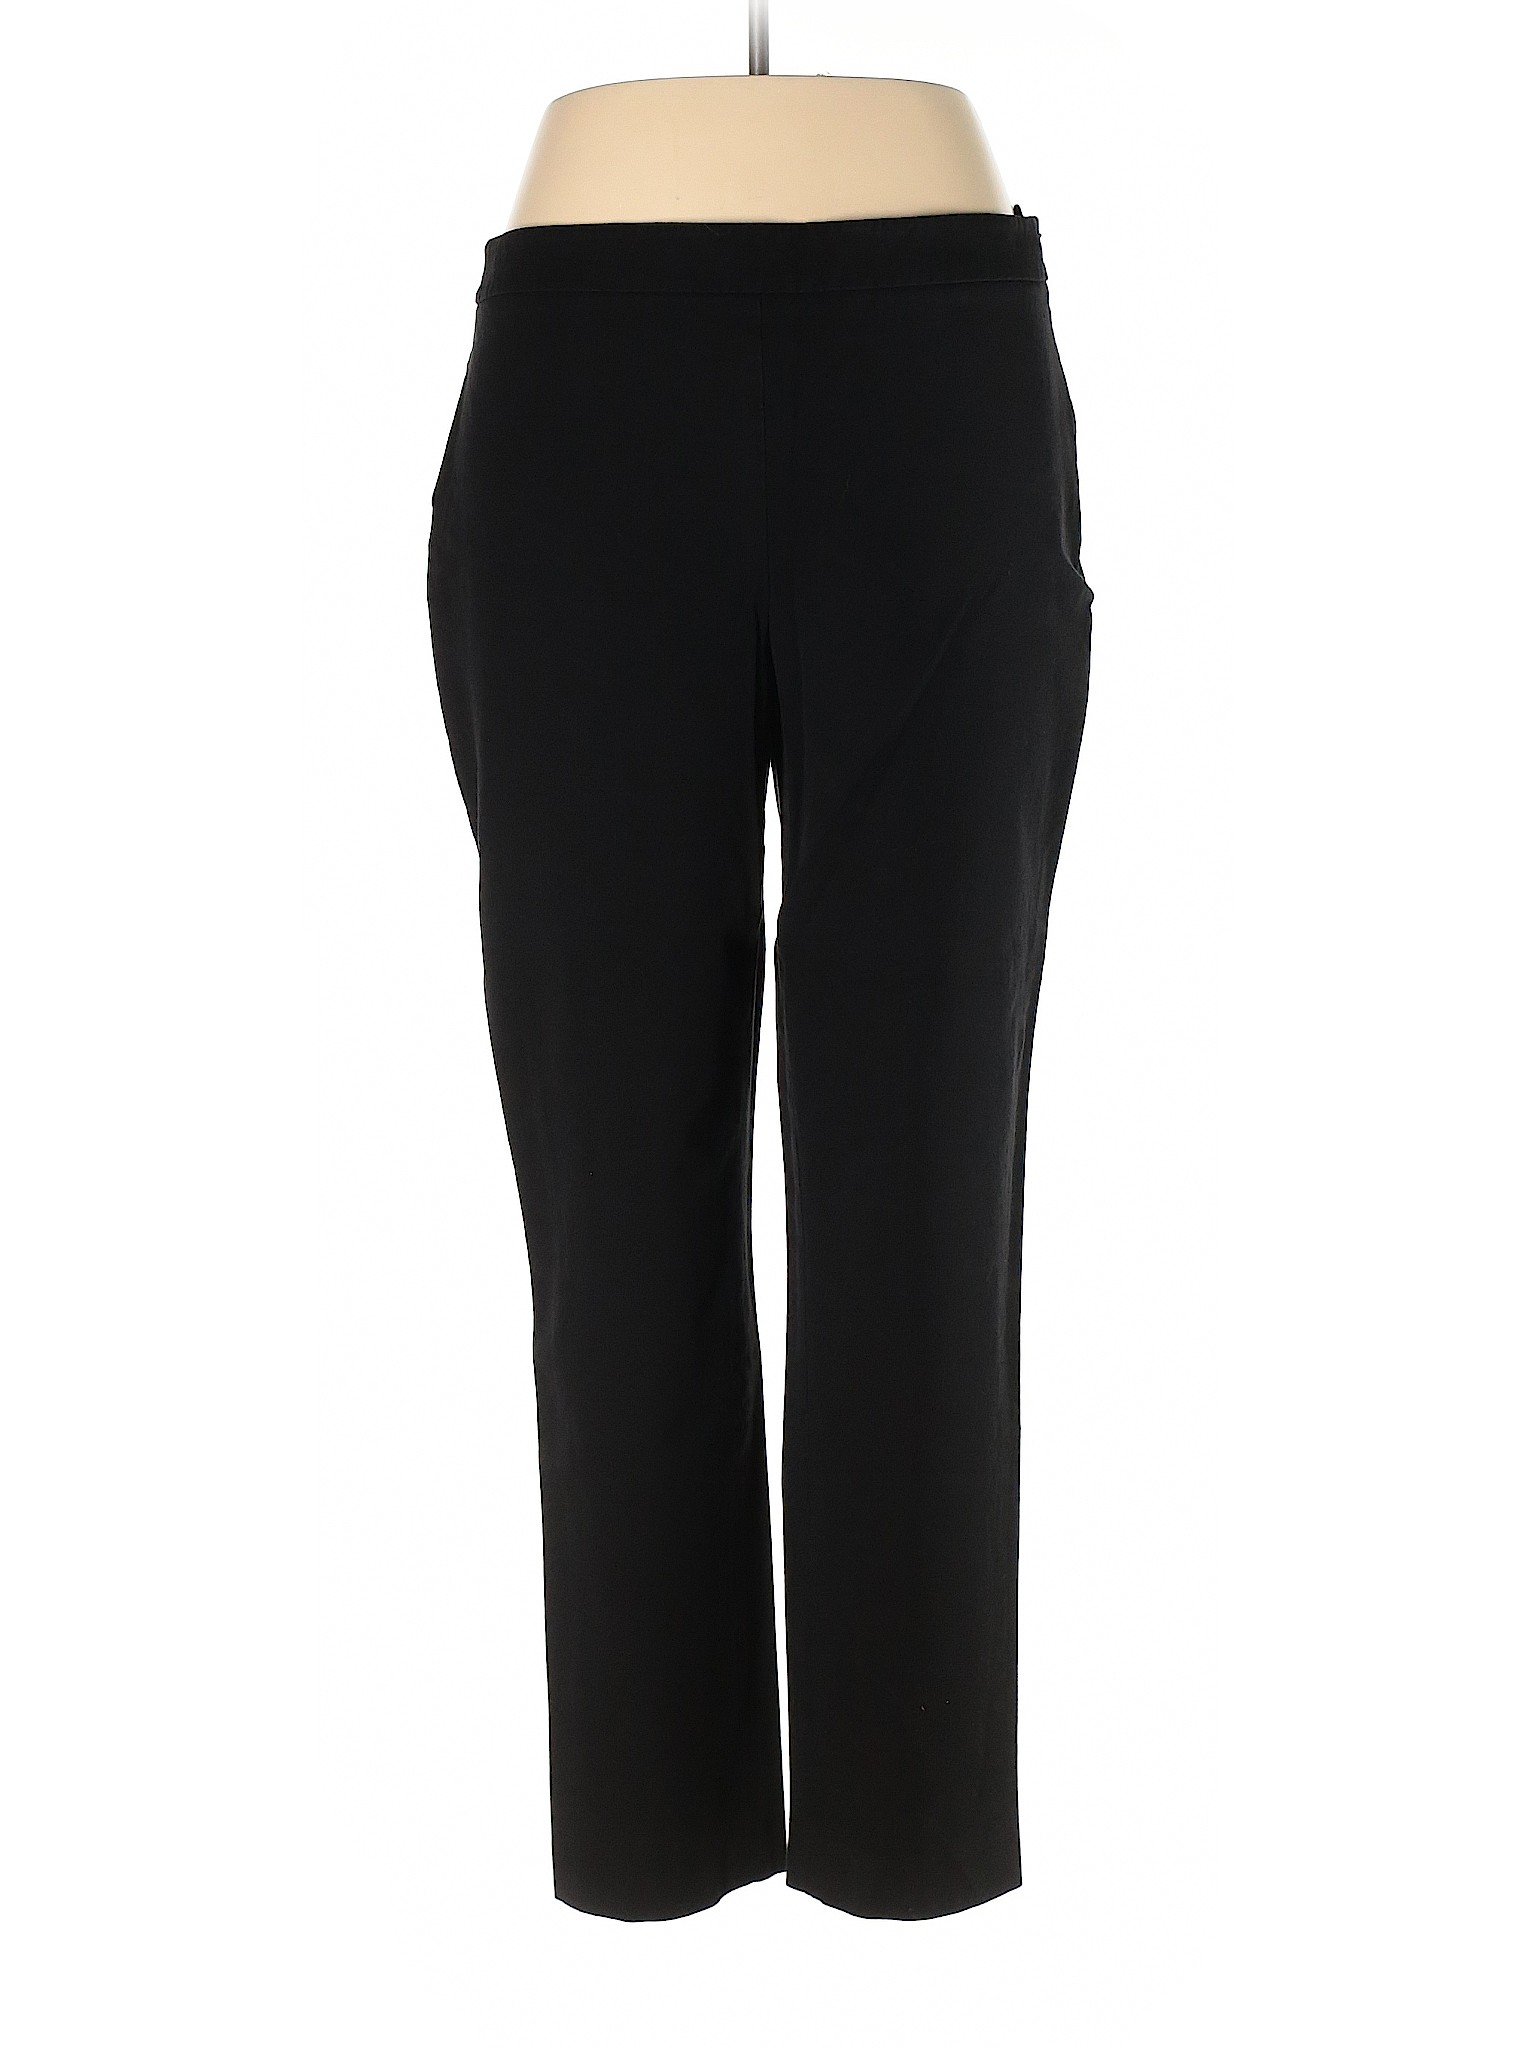 Talbots Women Black Casual Pants 16 | eBay